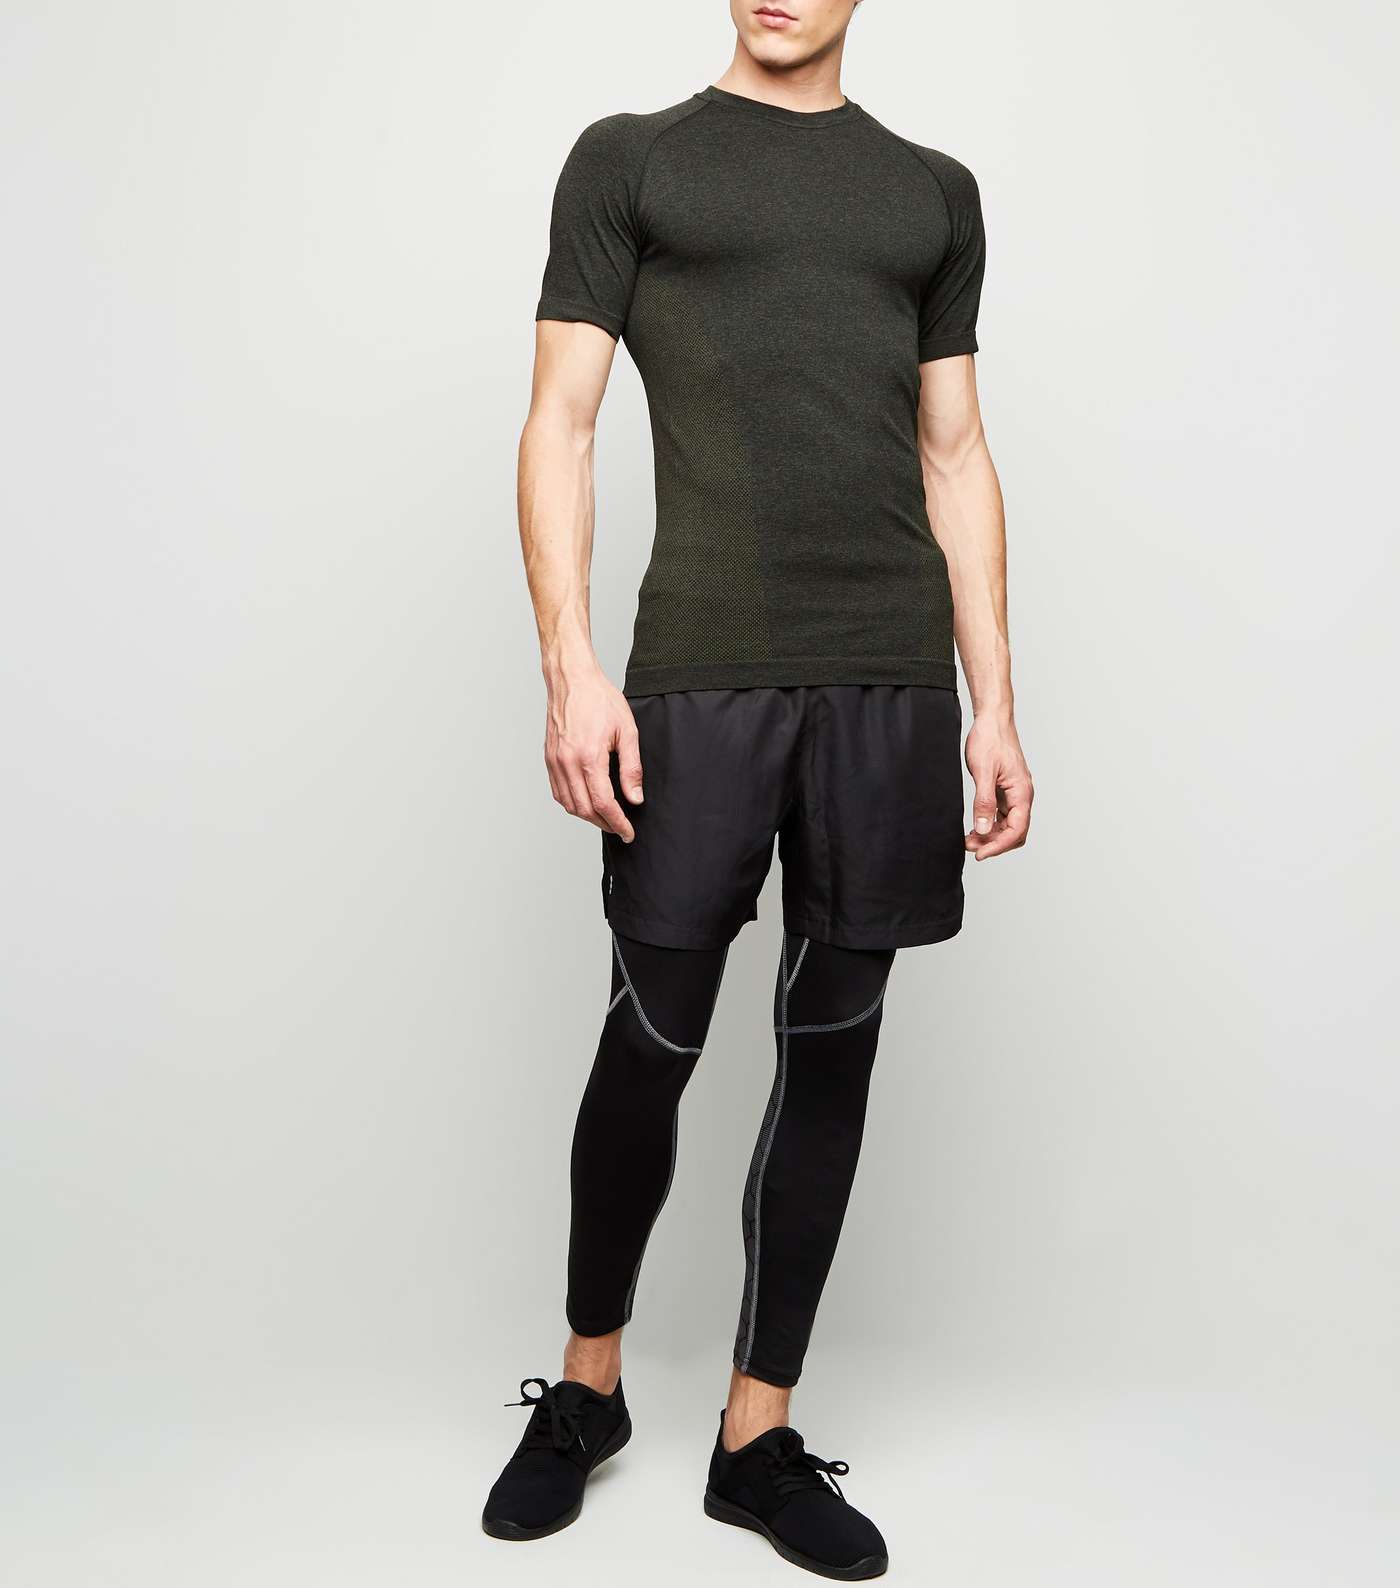 Khaki Raglan Sleeve Muscle Fit Sports T-Shirt   Image 2